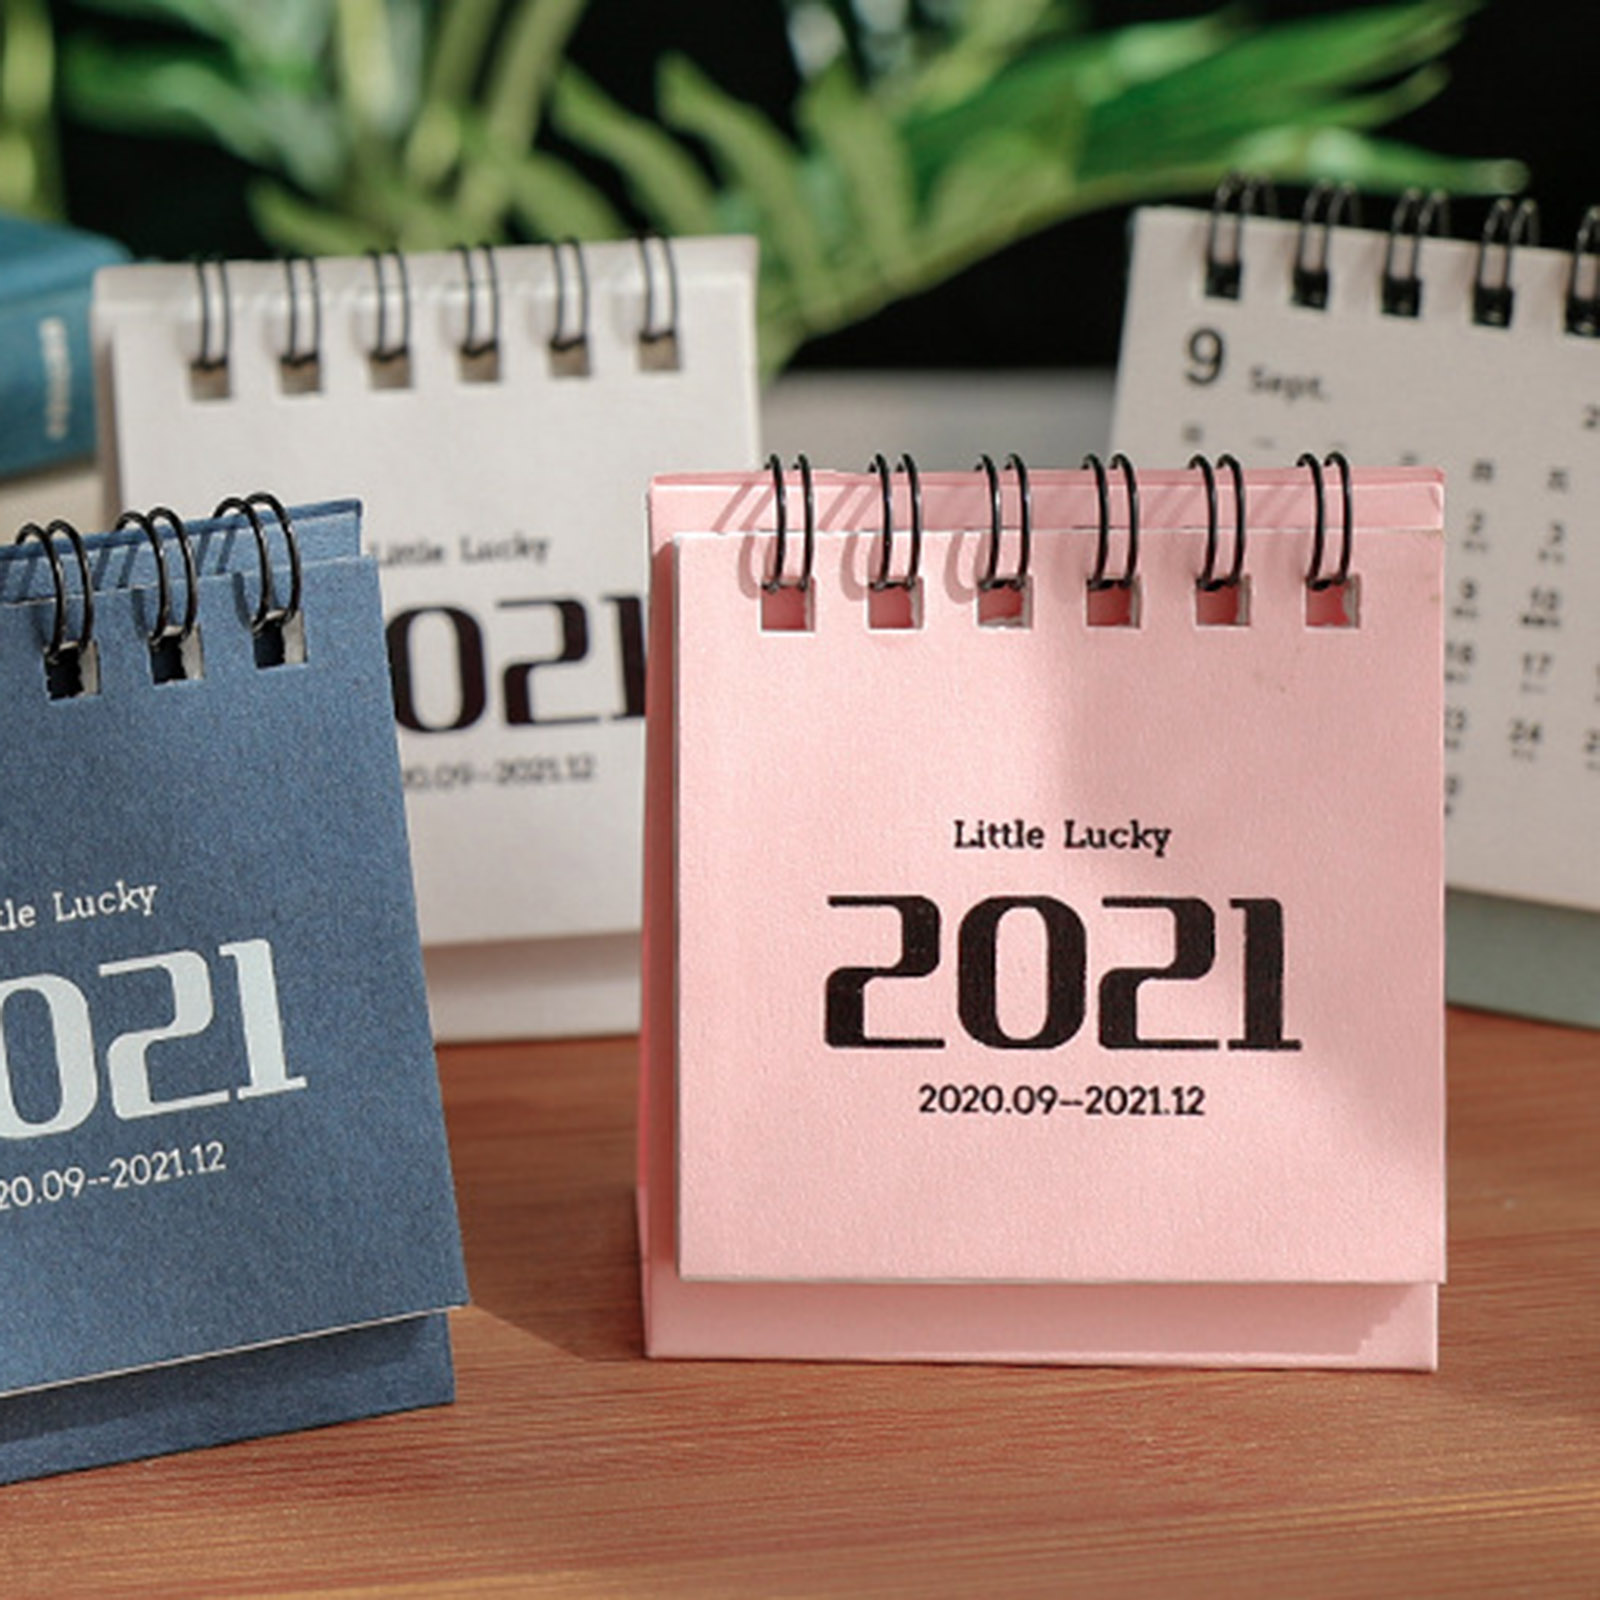 2021 Mini Desk Calendar Daily Schedule Planner Table Yearly Agenda Organizer